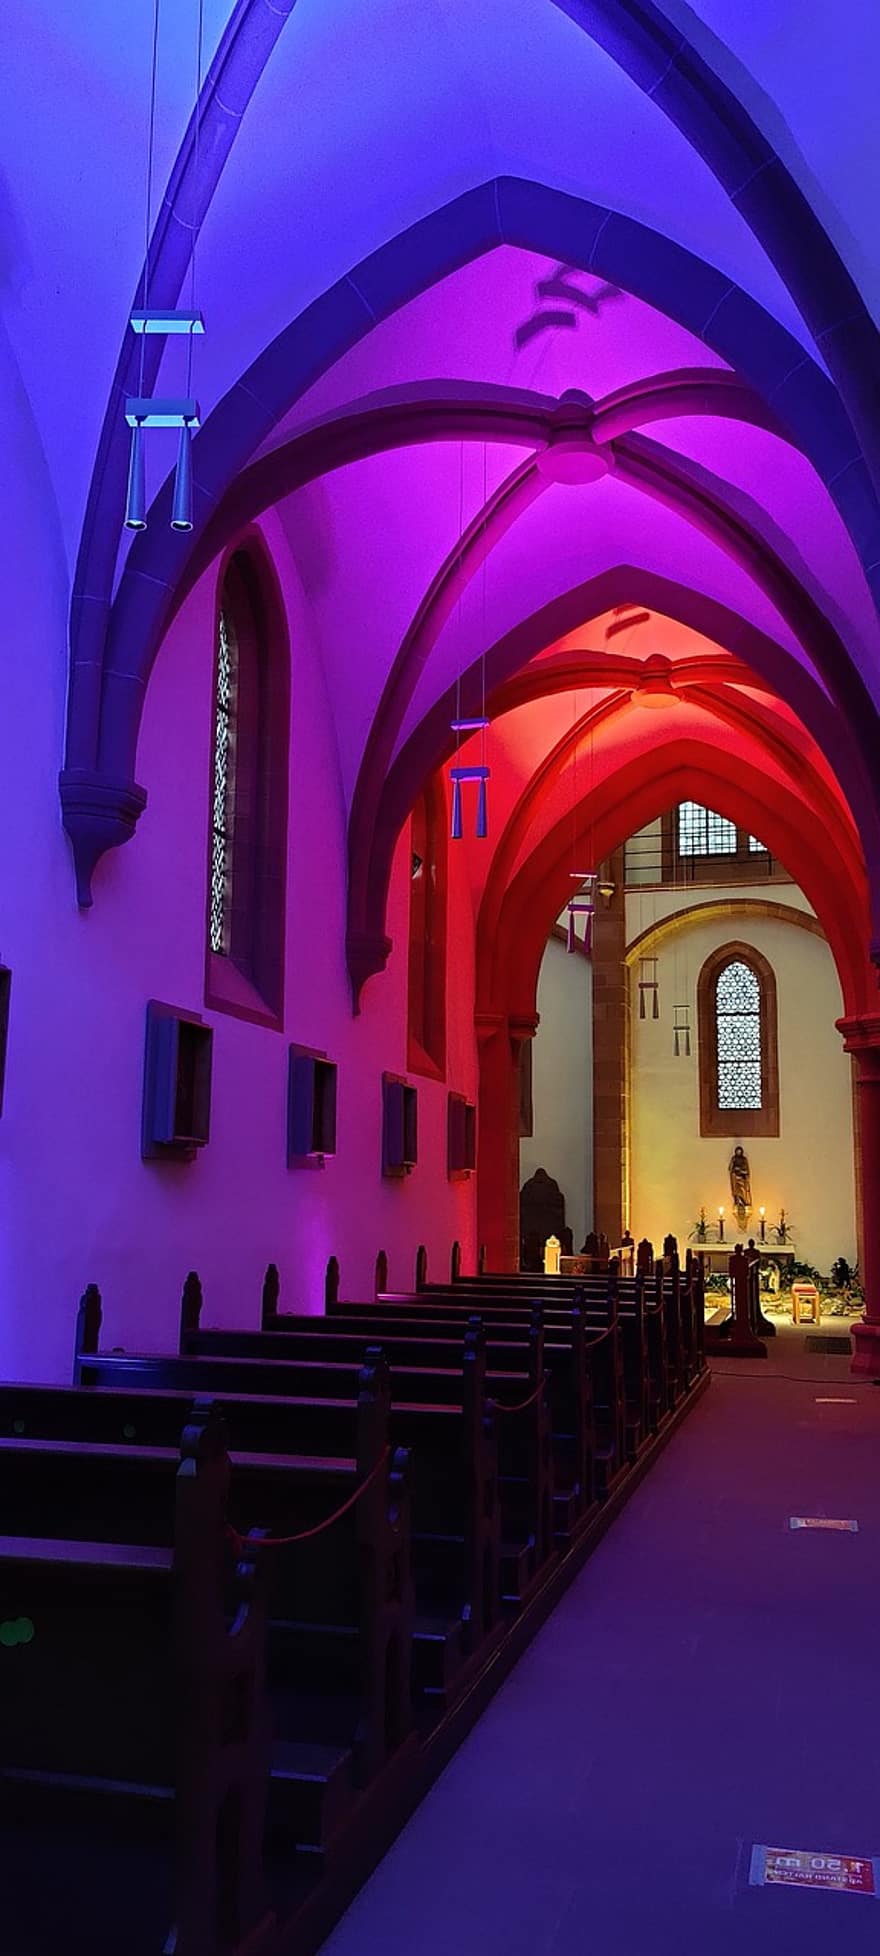 stiftskirche ، الكنيسة Ollegiate ، هندسة معمارية ، كنيسة ، دين ، أضواء ، amöneburg